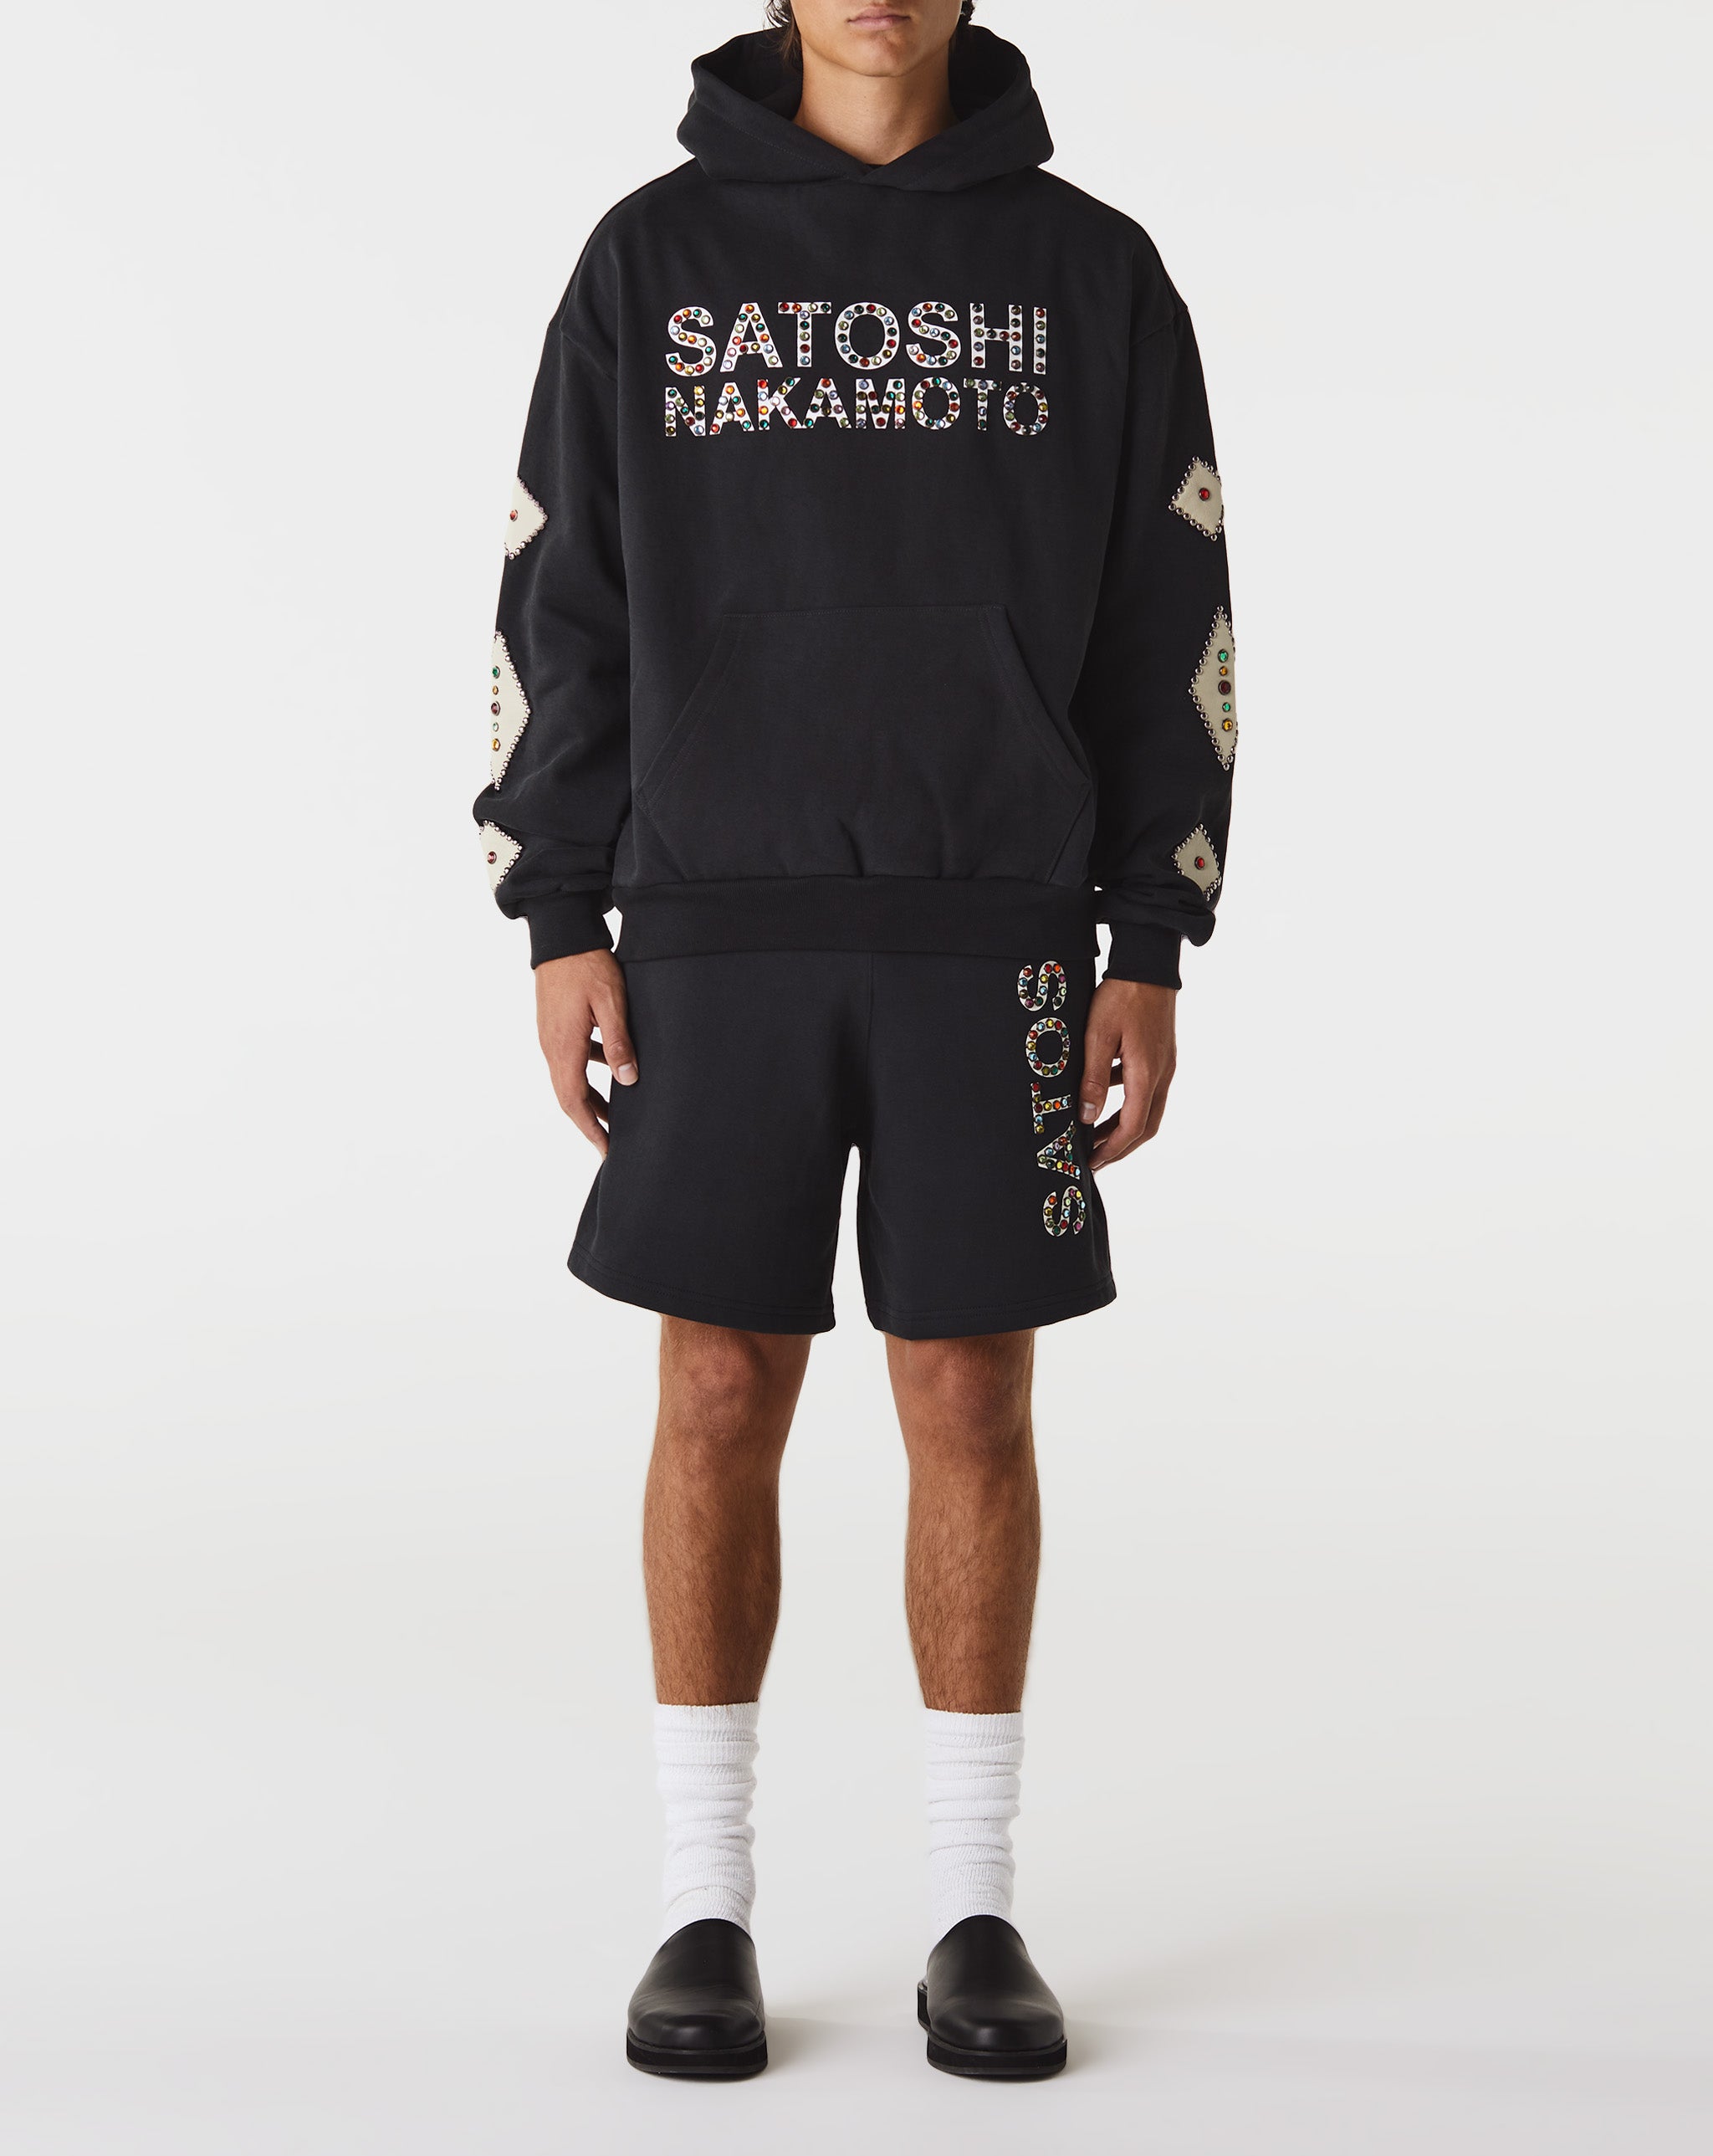 Satoshi Nakamoto Sweaters & Sweatshirts  - Cheap Erlebniswelt-fliegenfischen Jordan outlet